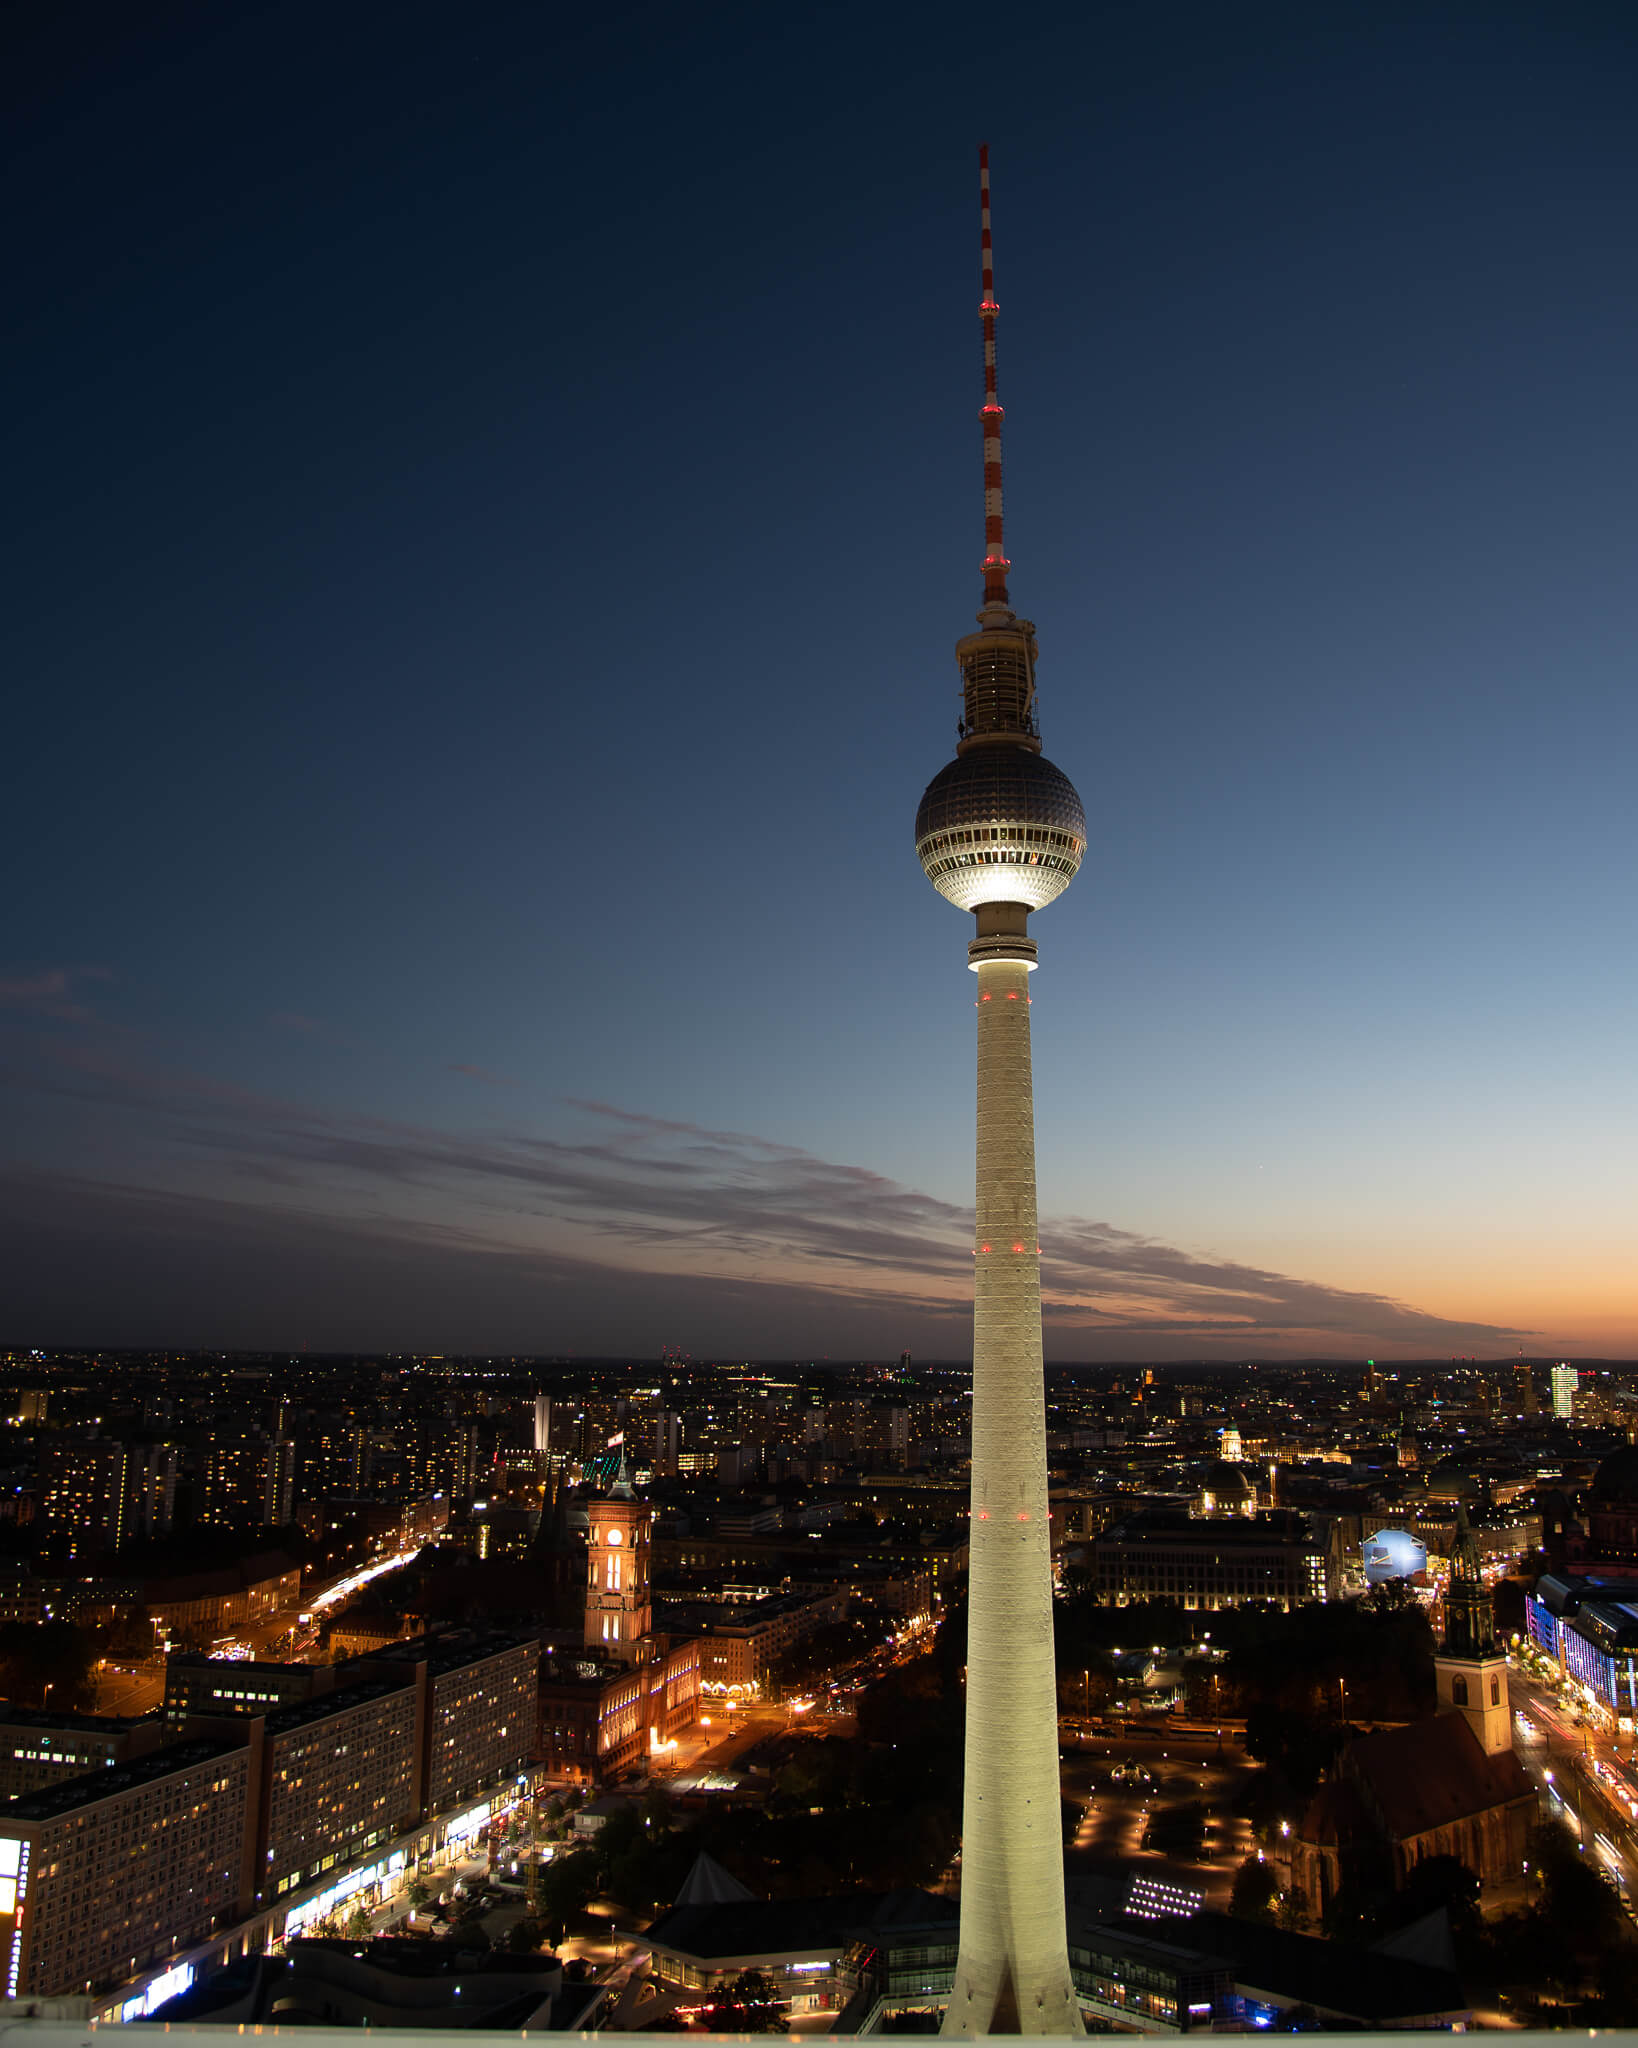 Sonnenuntergang in Berlin mit Fernsehturm